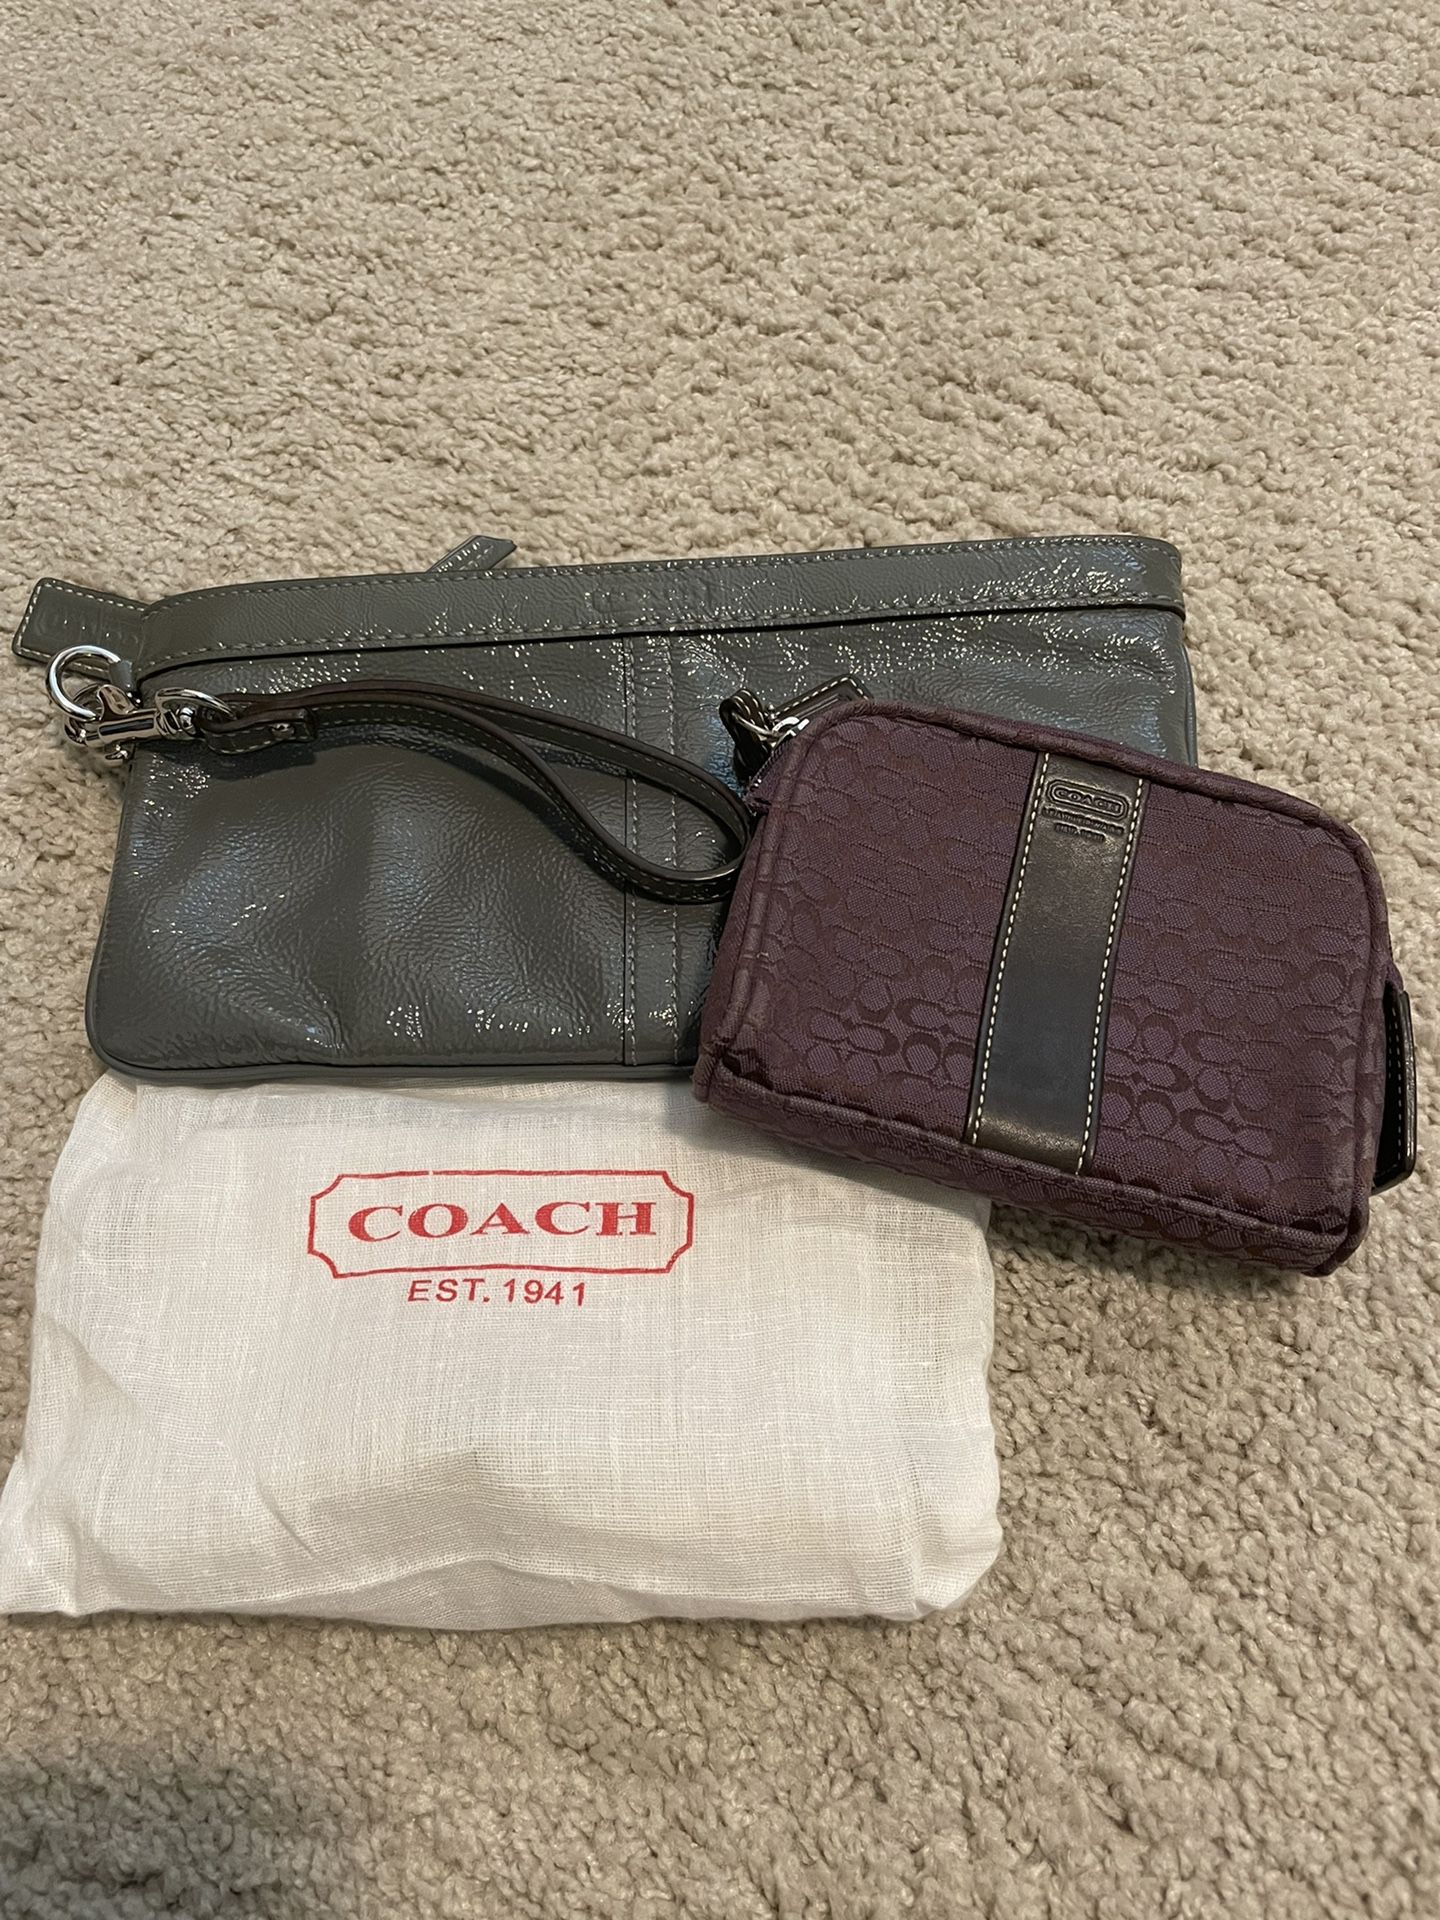 Coach clutch and small accessory case